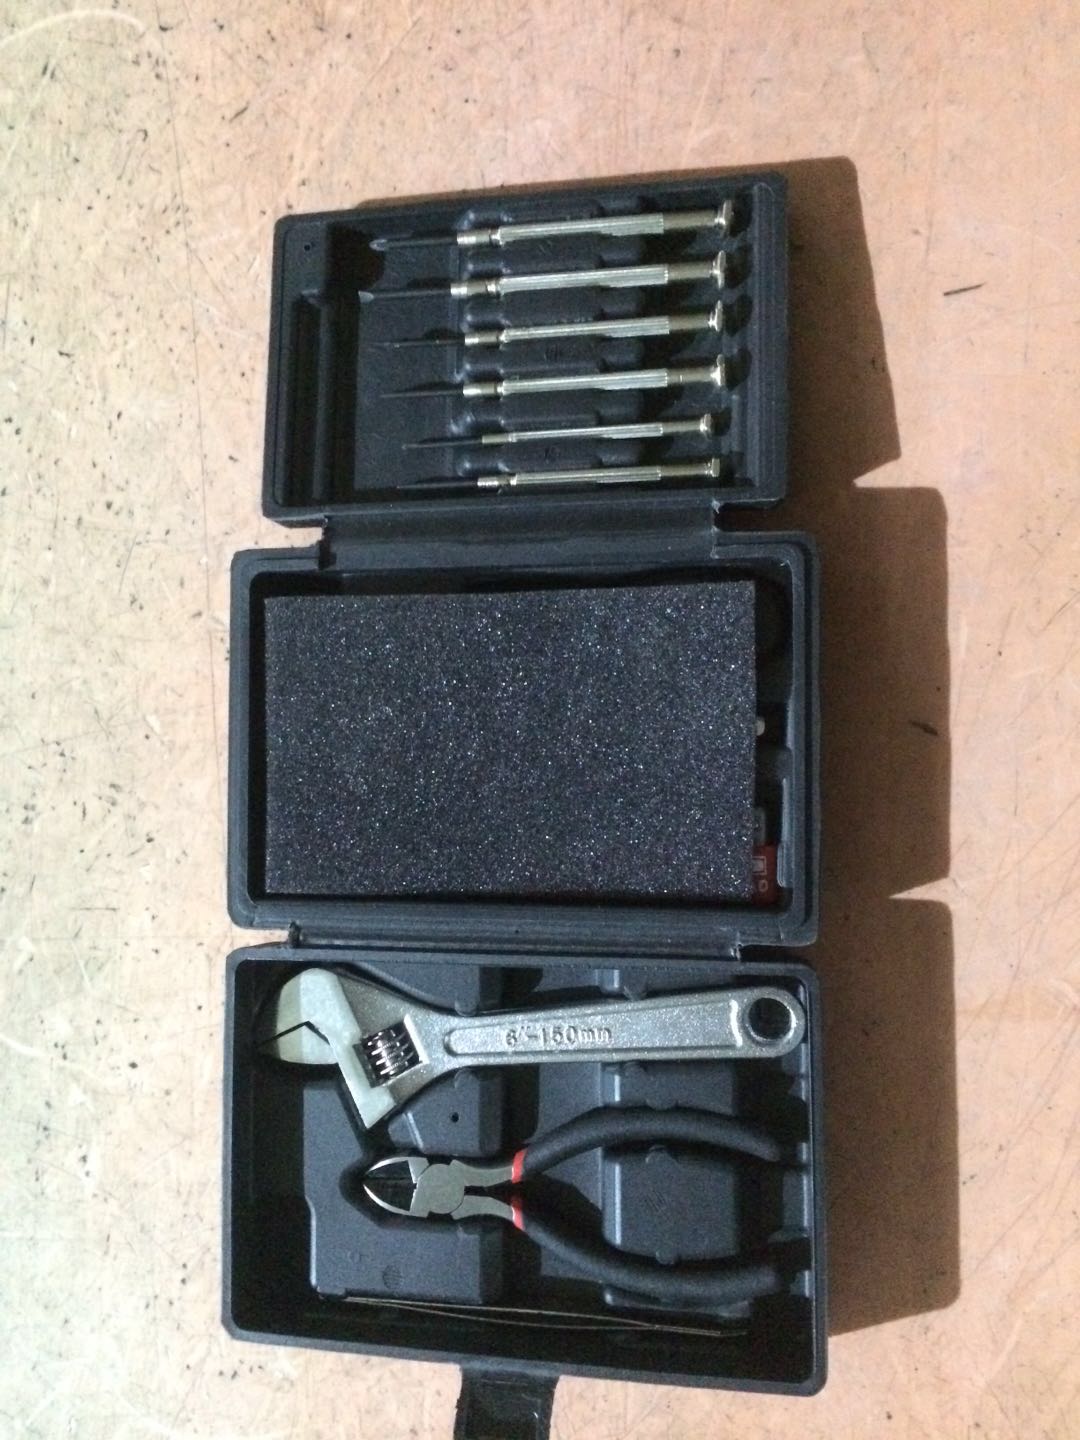 25pc Hand tool set